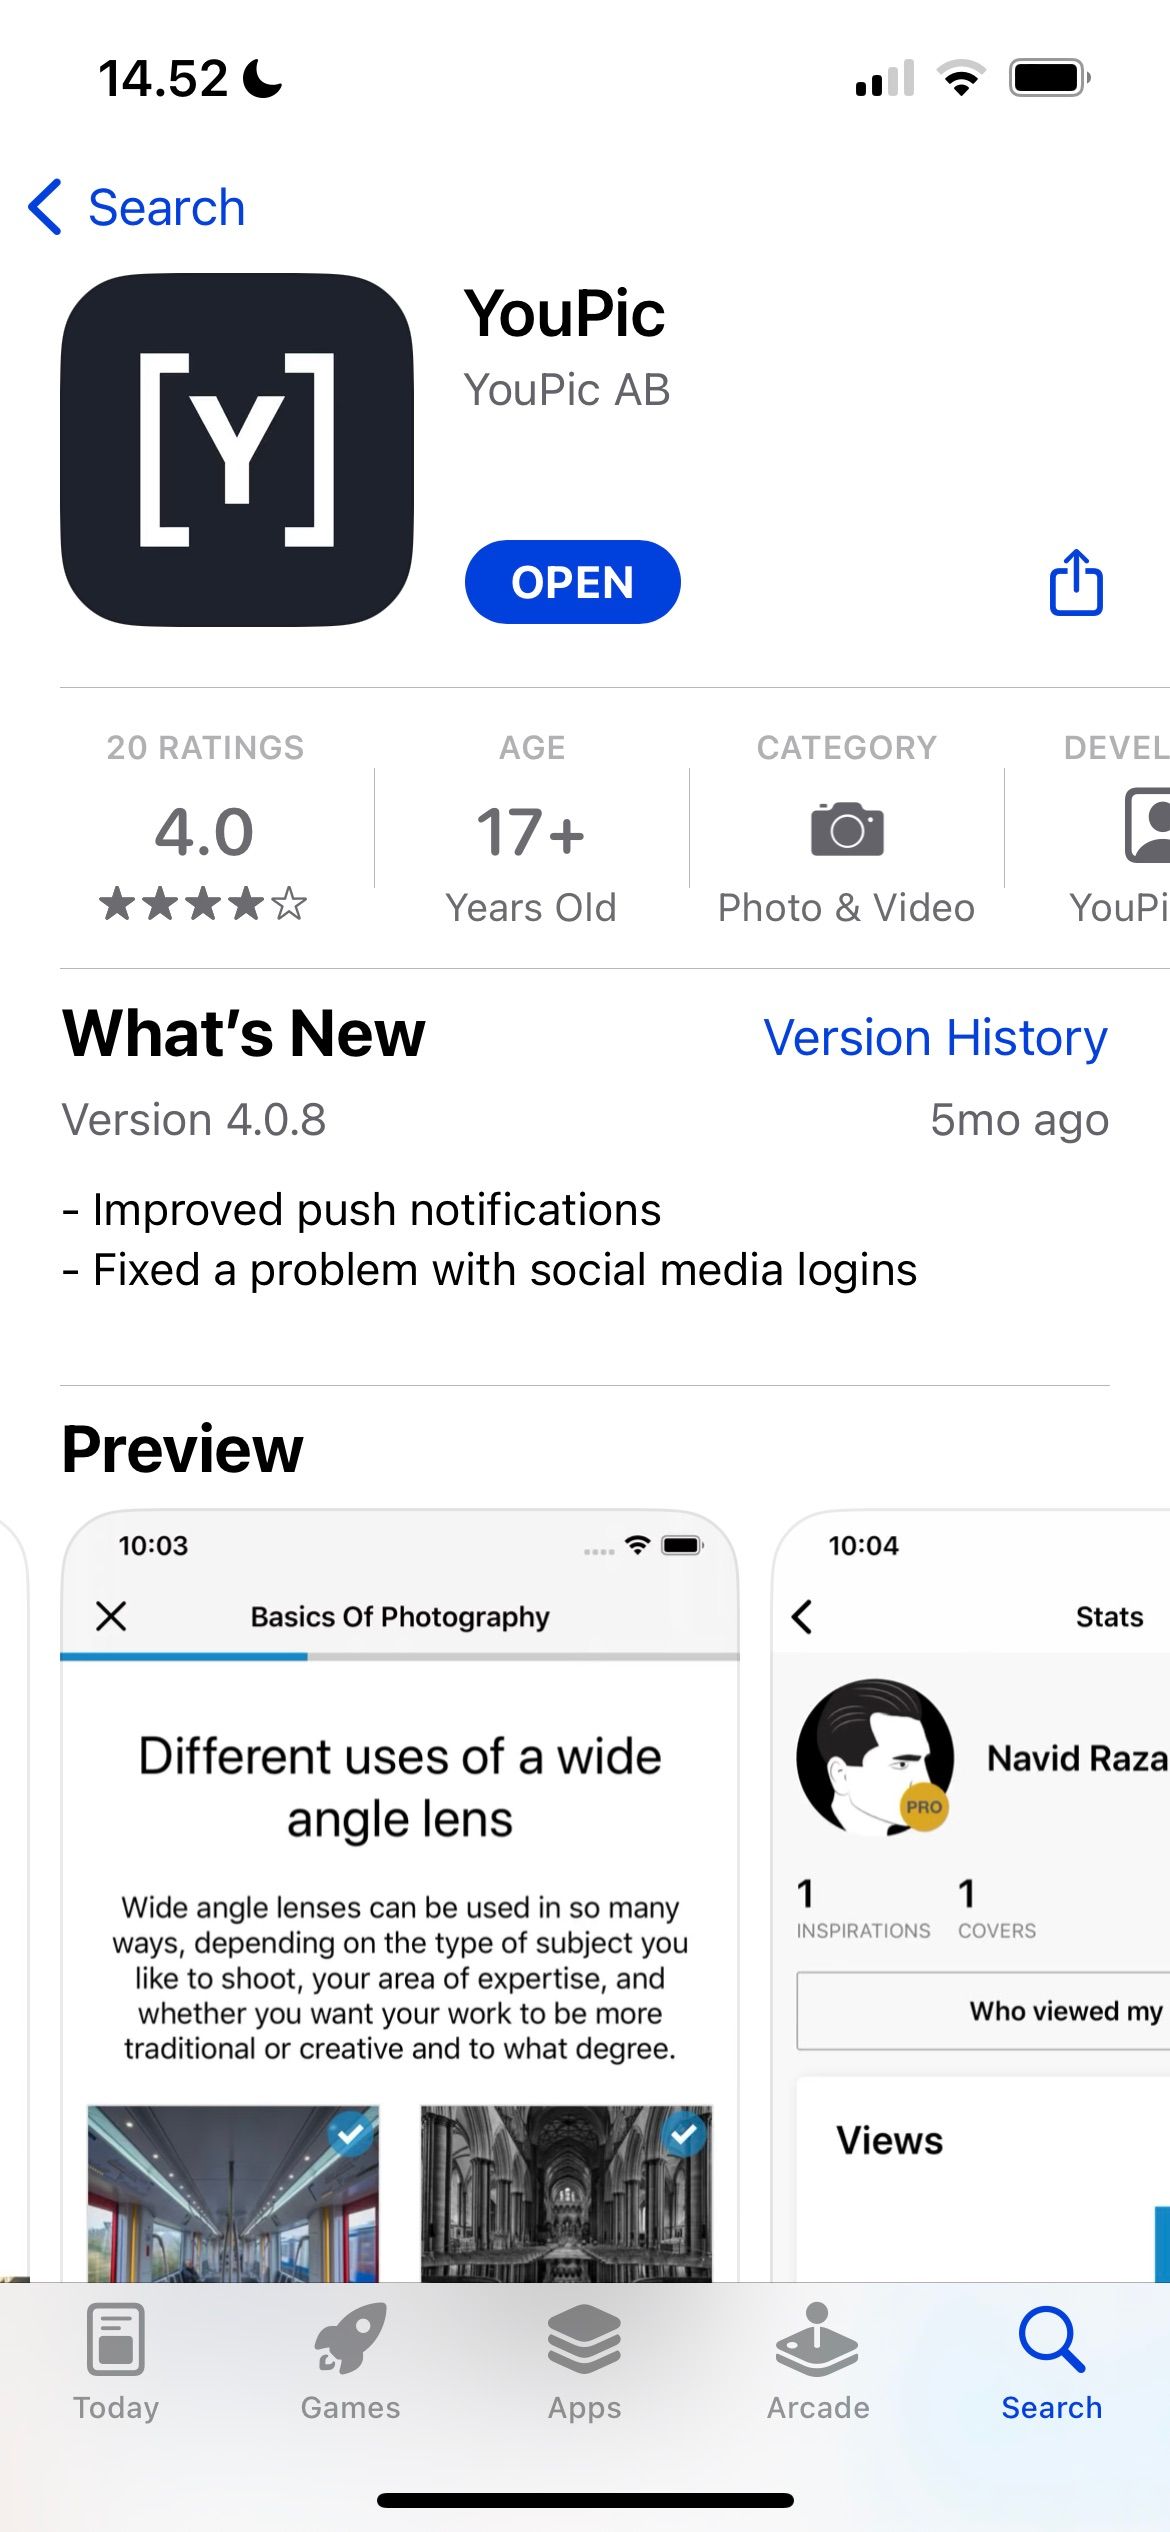 YouPic App on App Store Screenshot